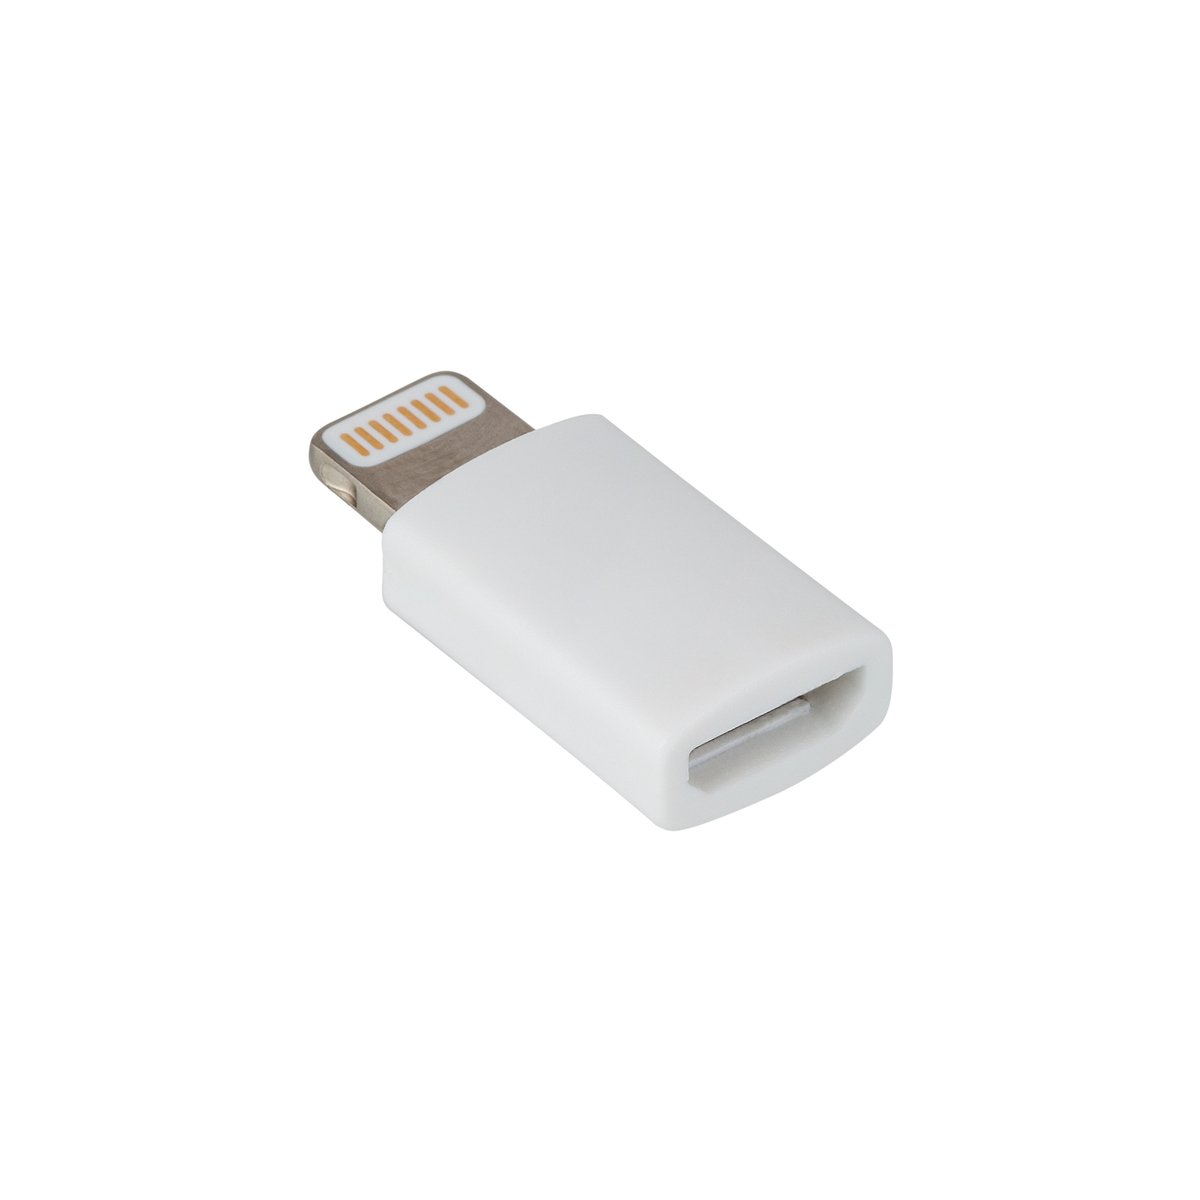 Адаптер apple lightning usb. Переходник Apple Lightning MICROUSB. Переходник Apple Lightning USB. Переходник / адаптер USB Type-c - Apple Lightning. Переходник эпл Лайтинг на USB.